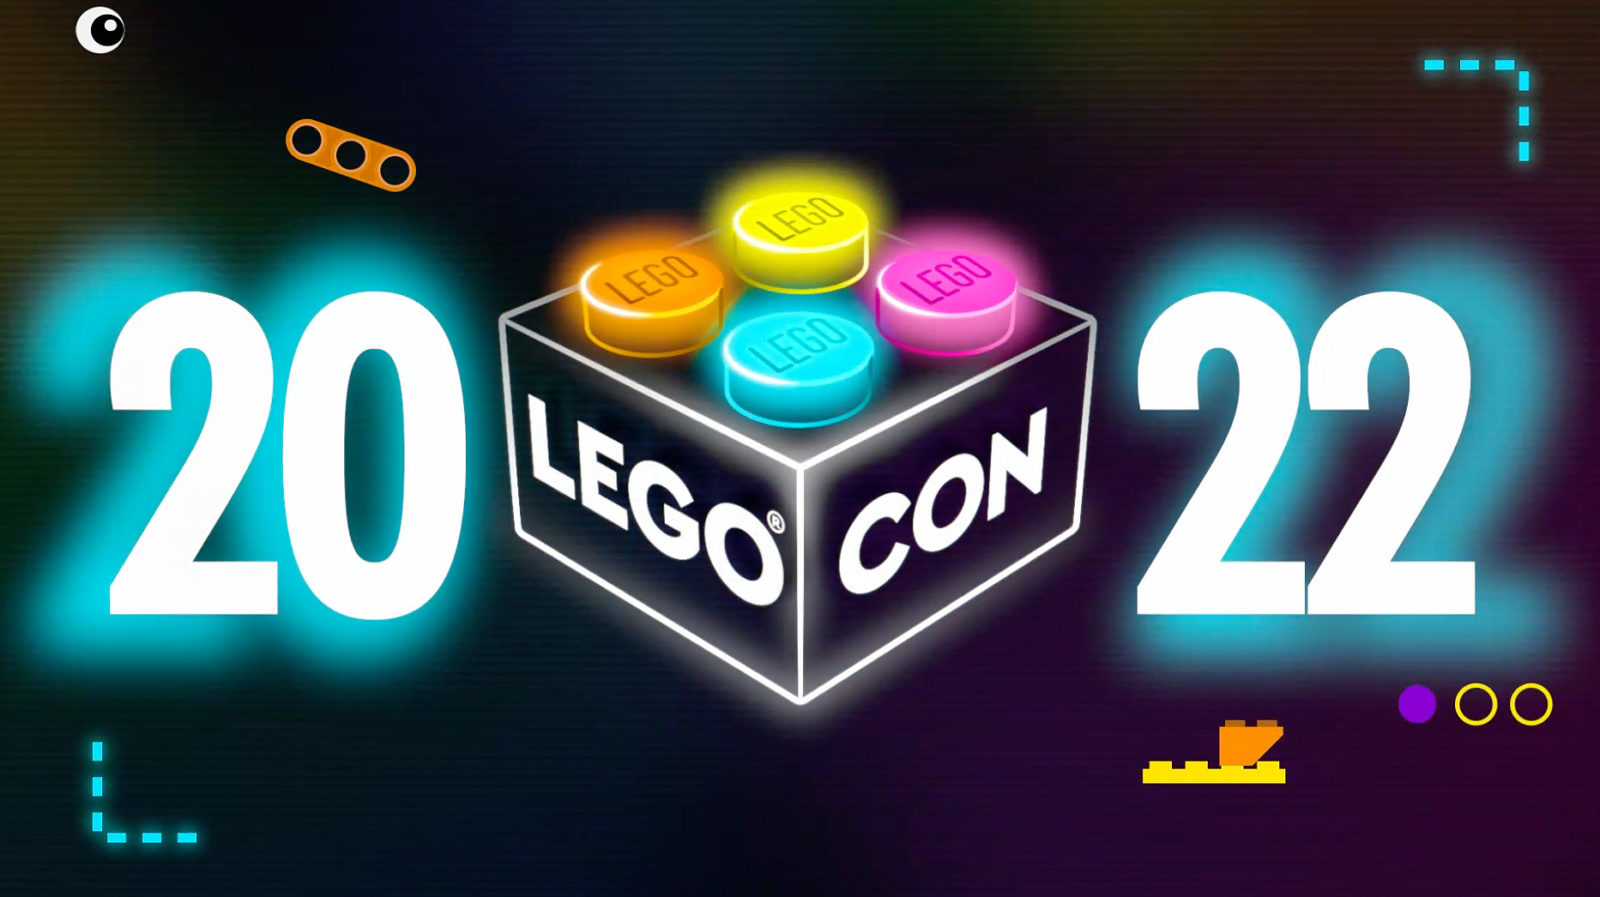 LEGO CON 2022: LEGO Online konvencija vraća se 18. lipnja 2022.